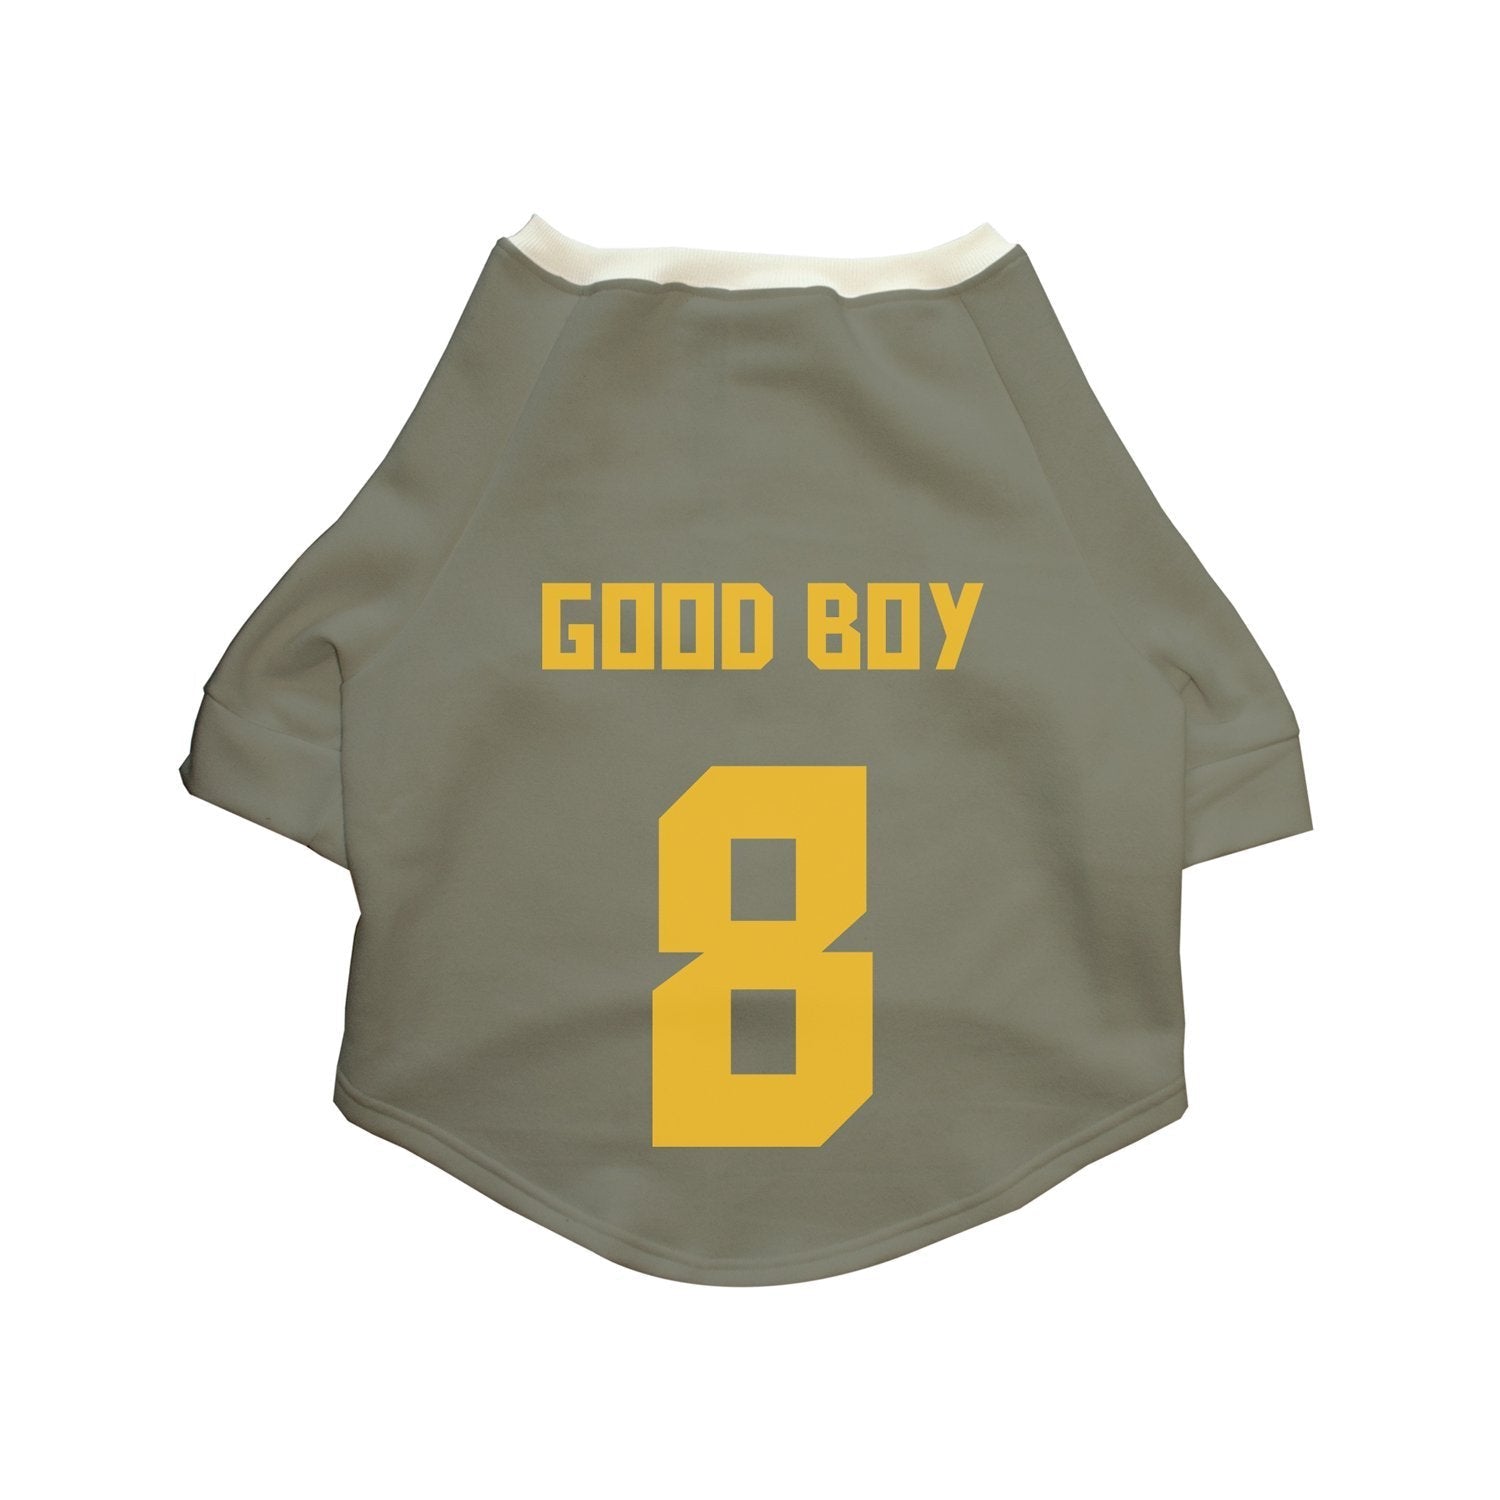 Ruse "Good Boy Number - 8" Dog Technical Jacket